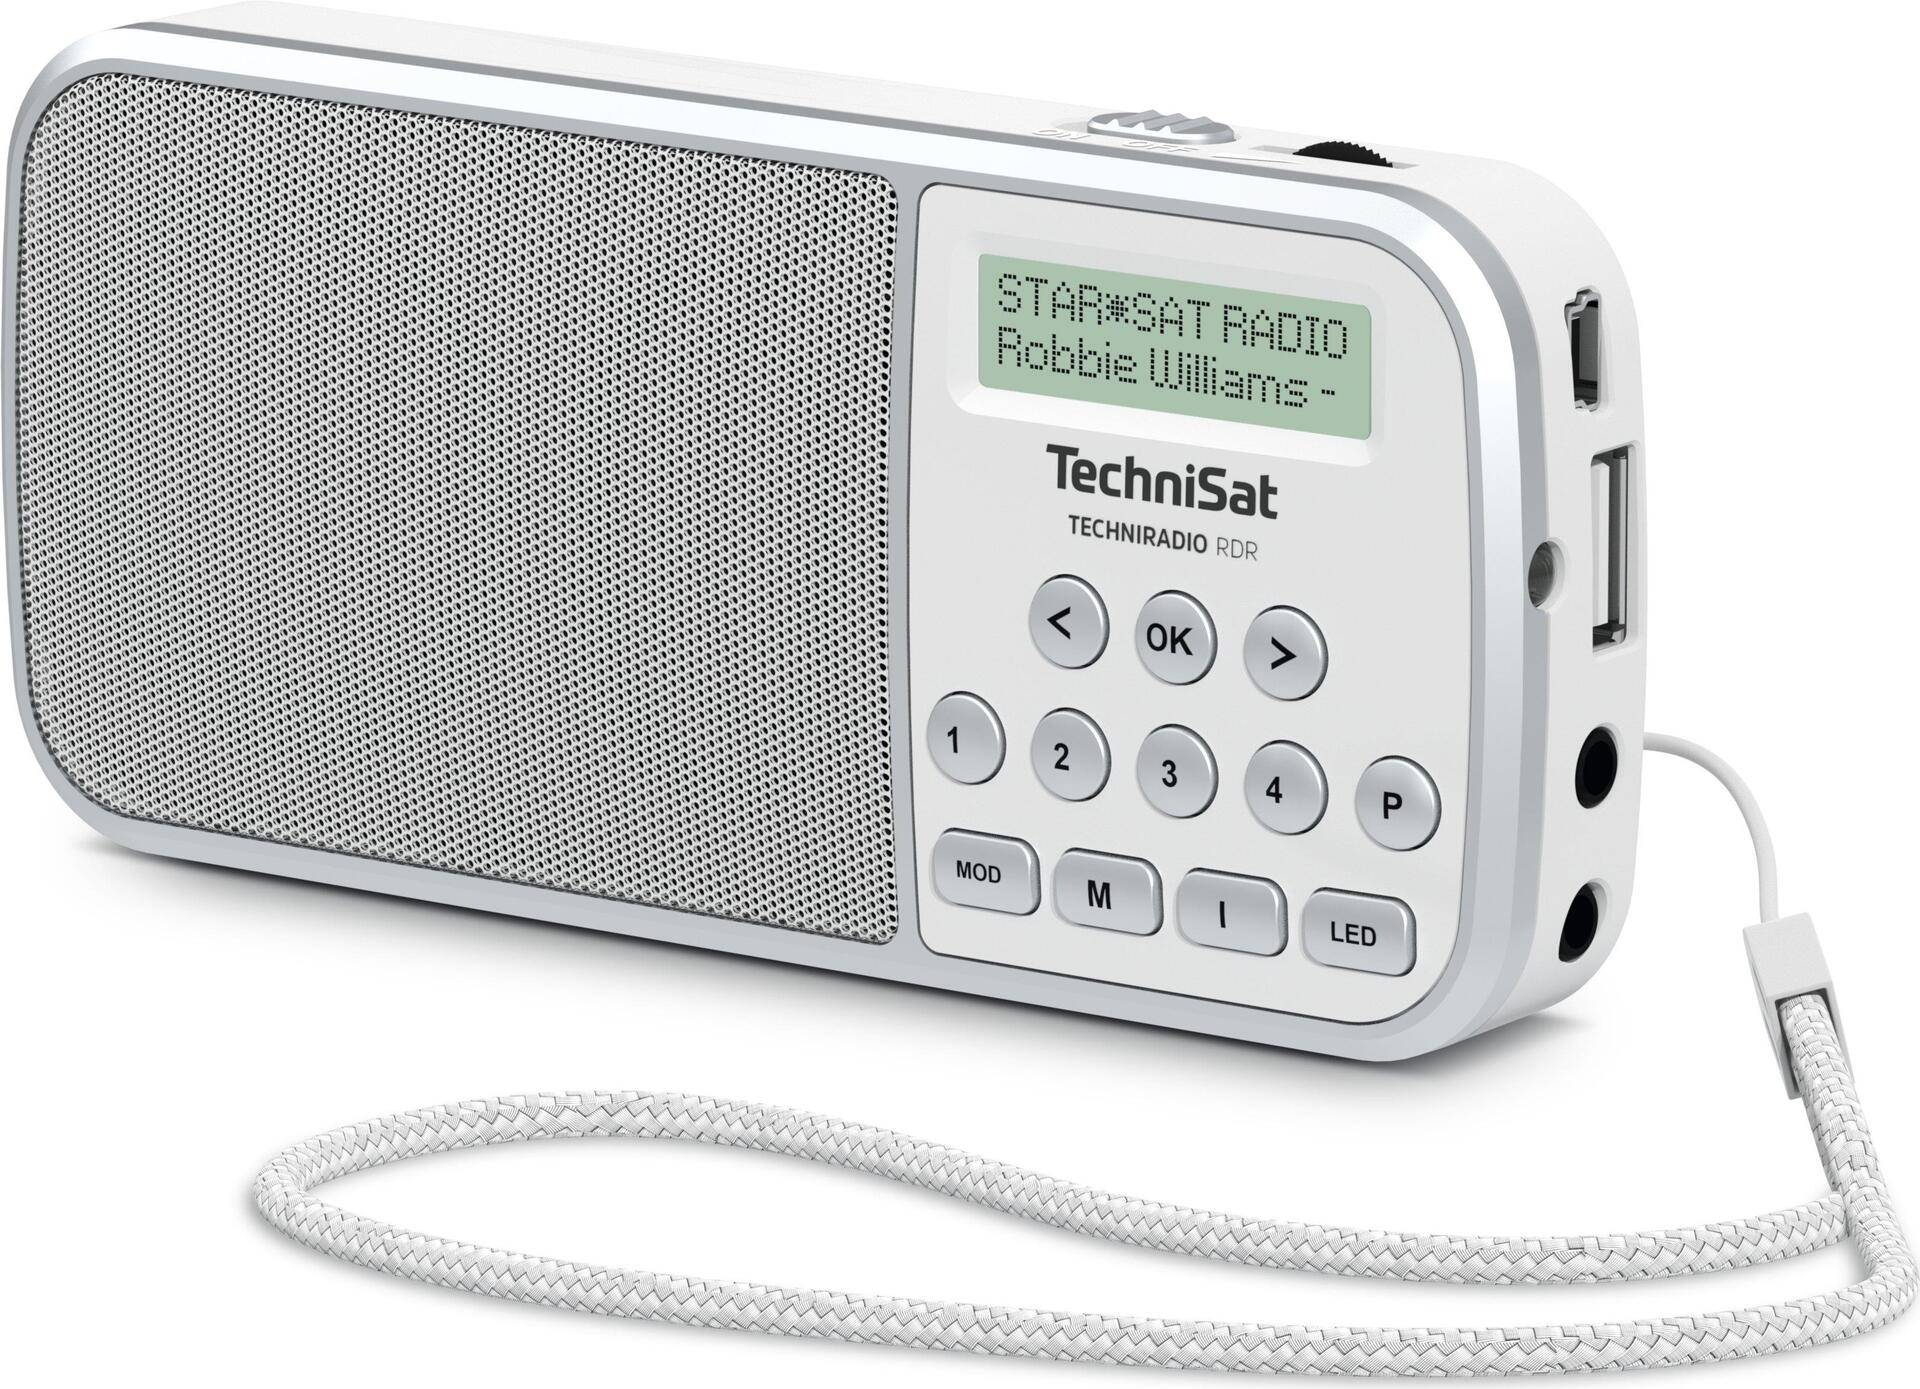 TechniSat TechniRadio RDR - Tragbares DAB-Radio - 1 Watt von Technisat